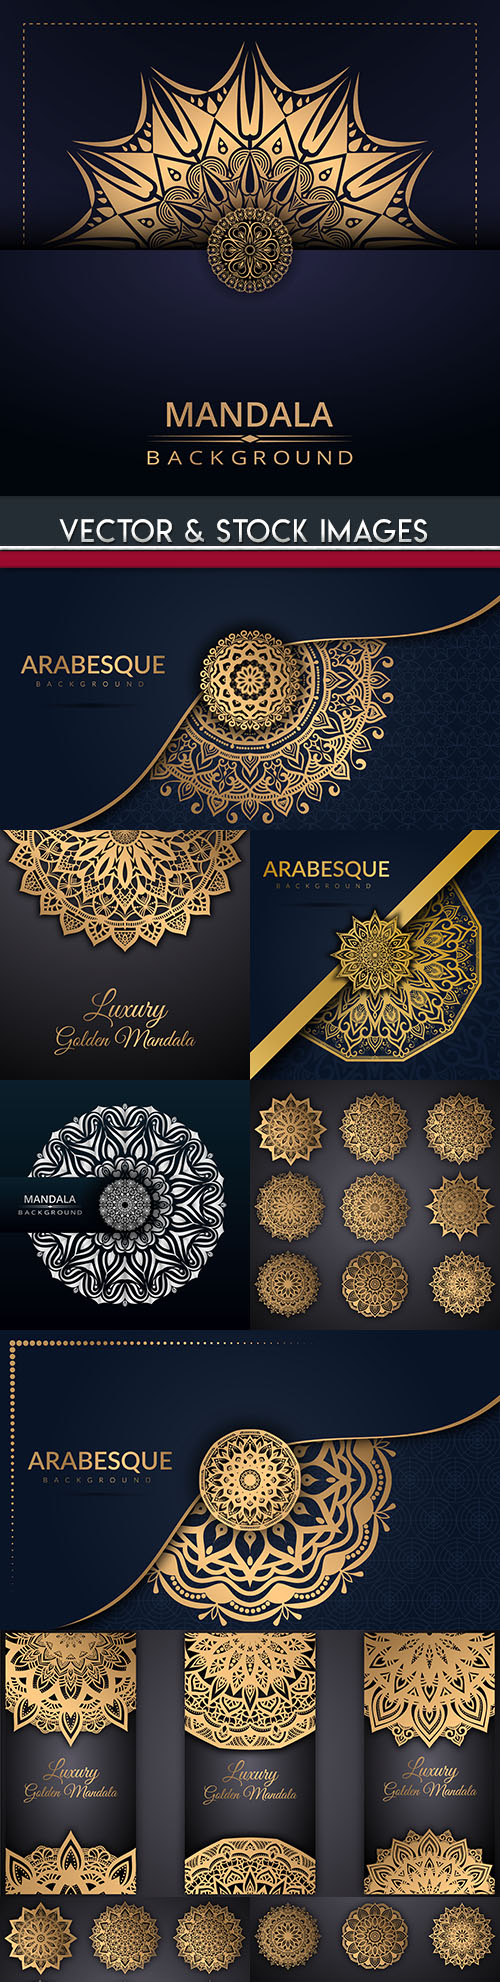 Mandala gold decorative ornament design background